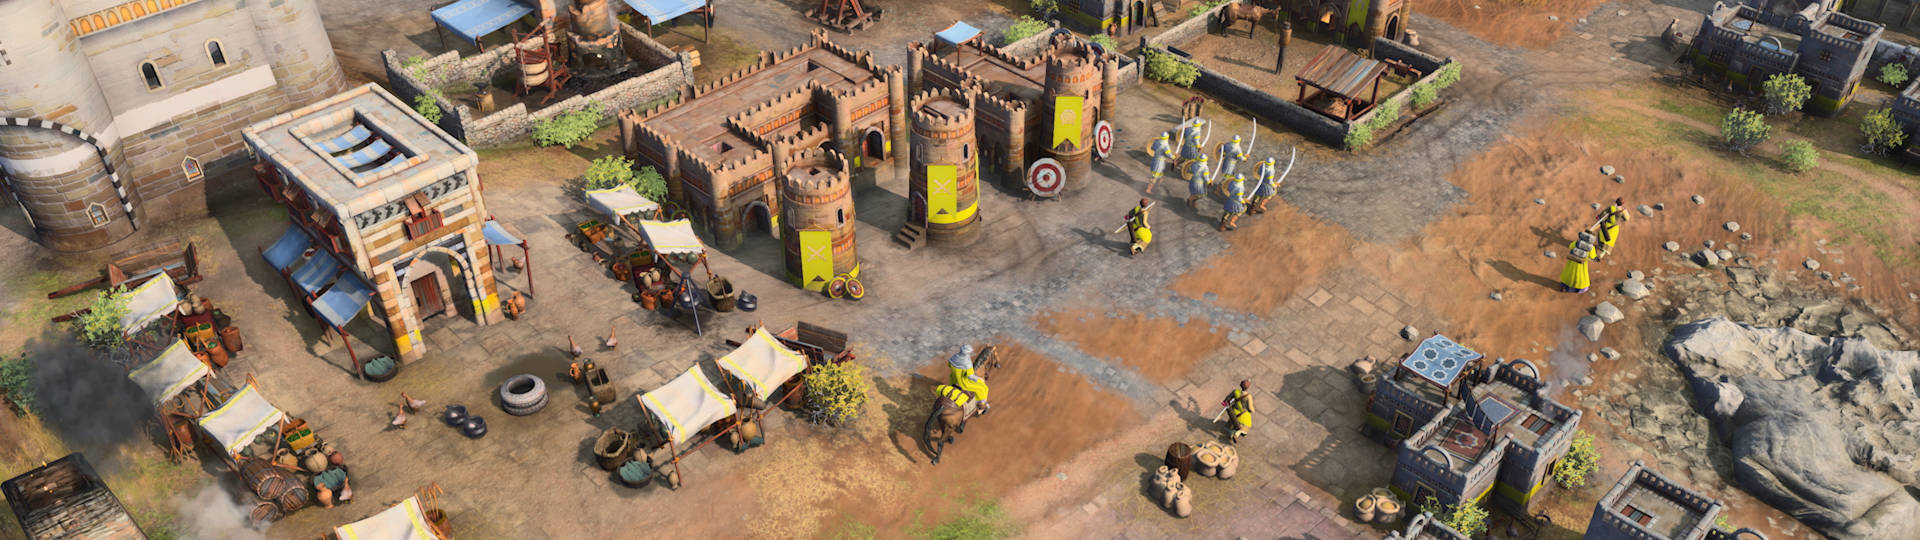 Keywords Studios Acquiring Age of Empires Developer Forgotten Empires slice